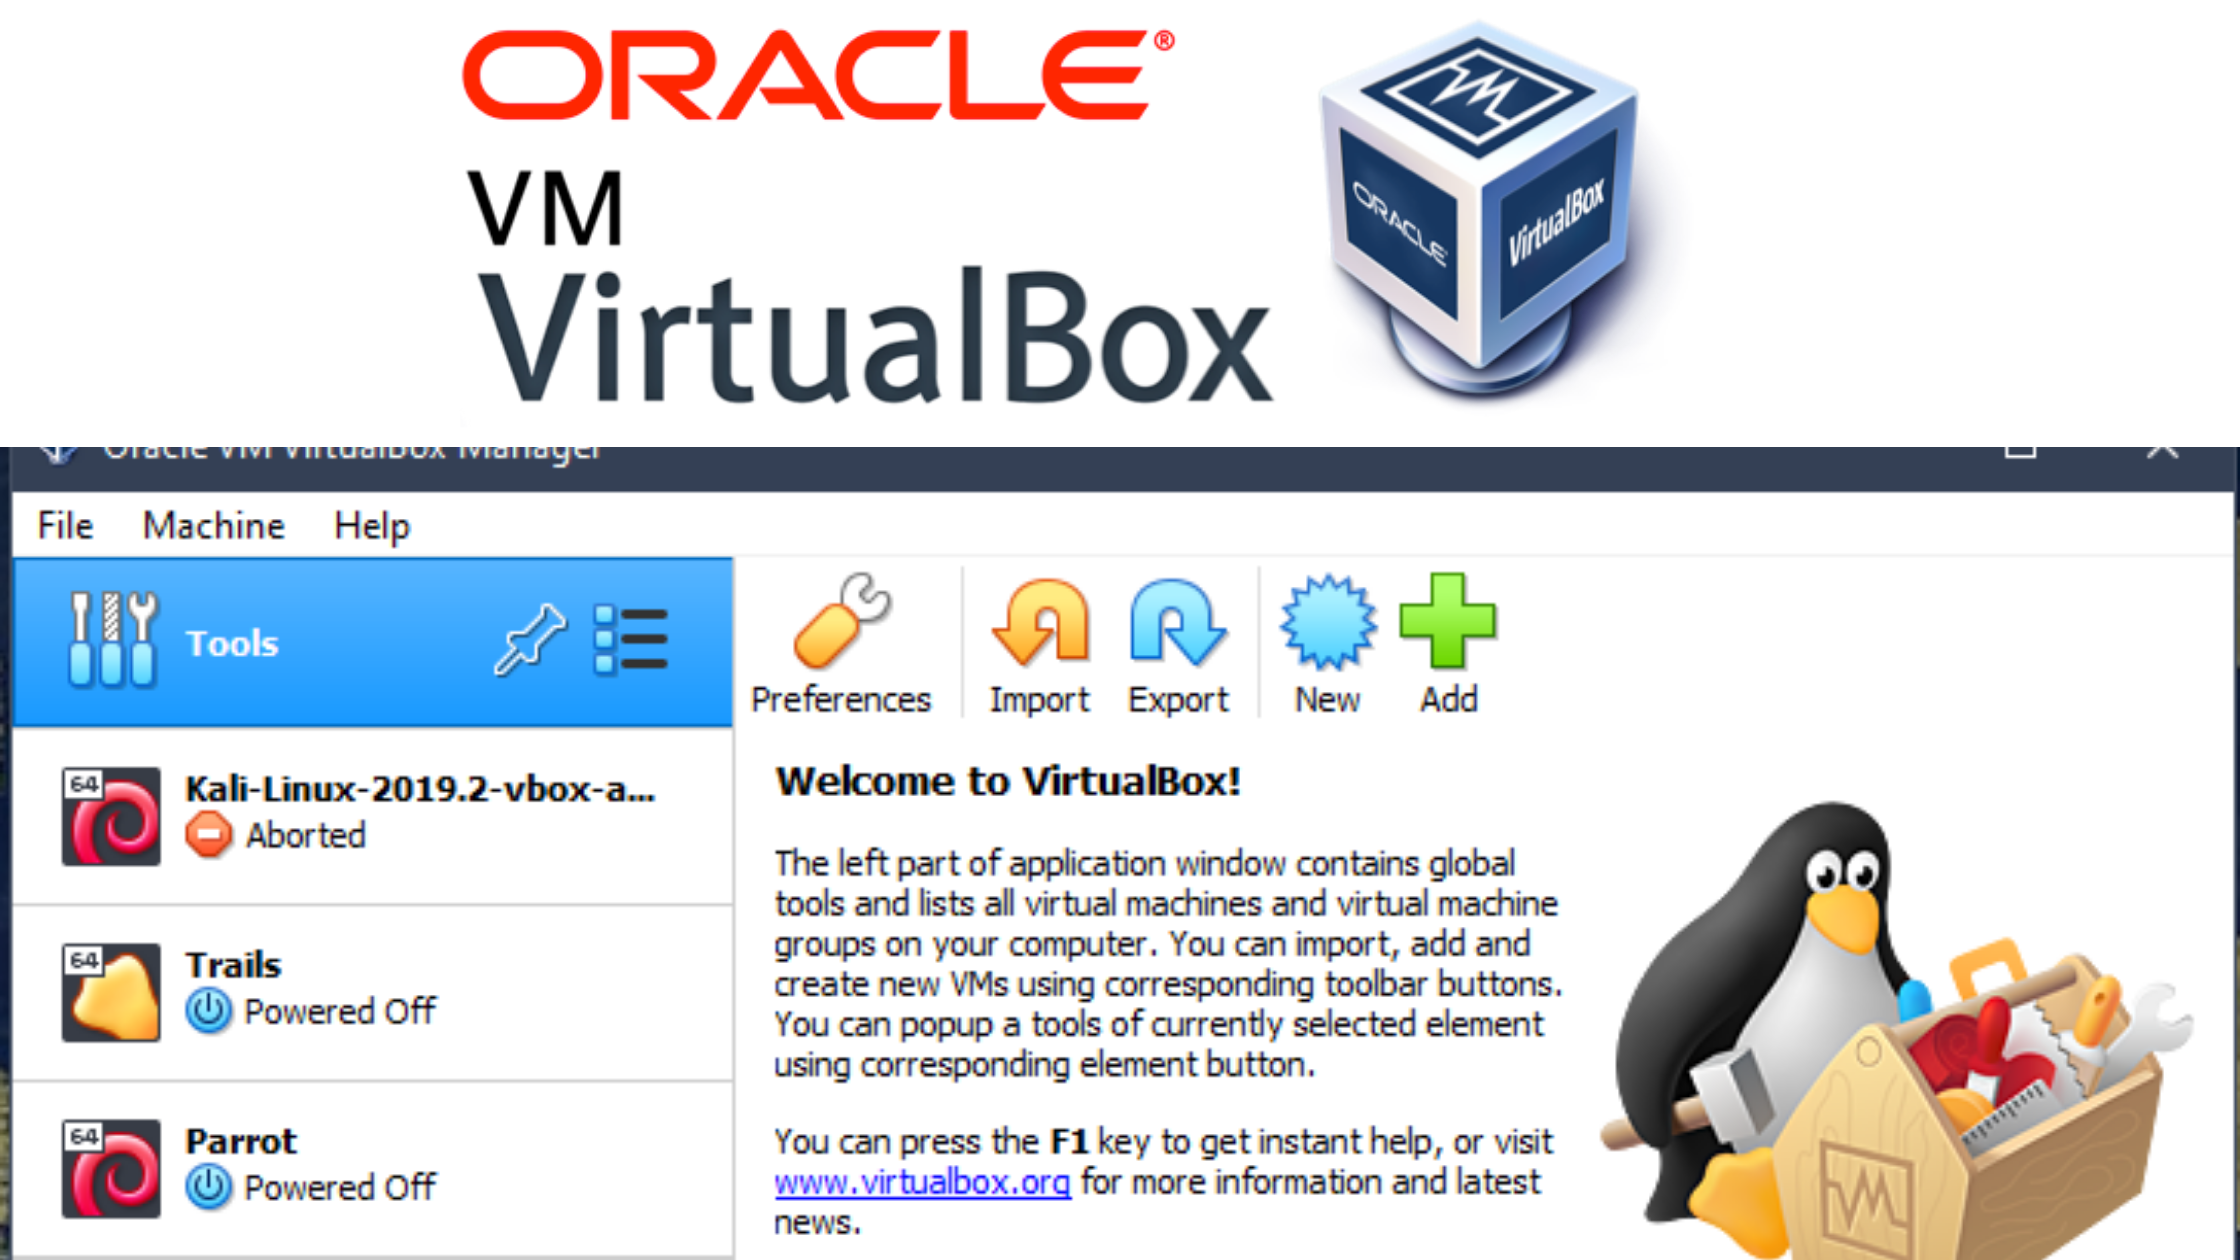 Oracle-VM-VirtualBox-men-of-letters